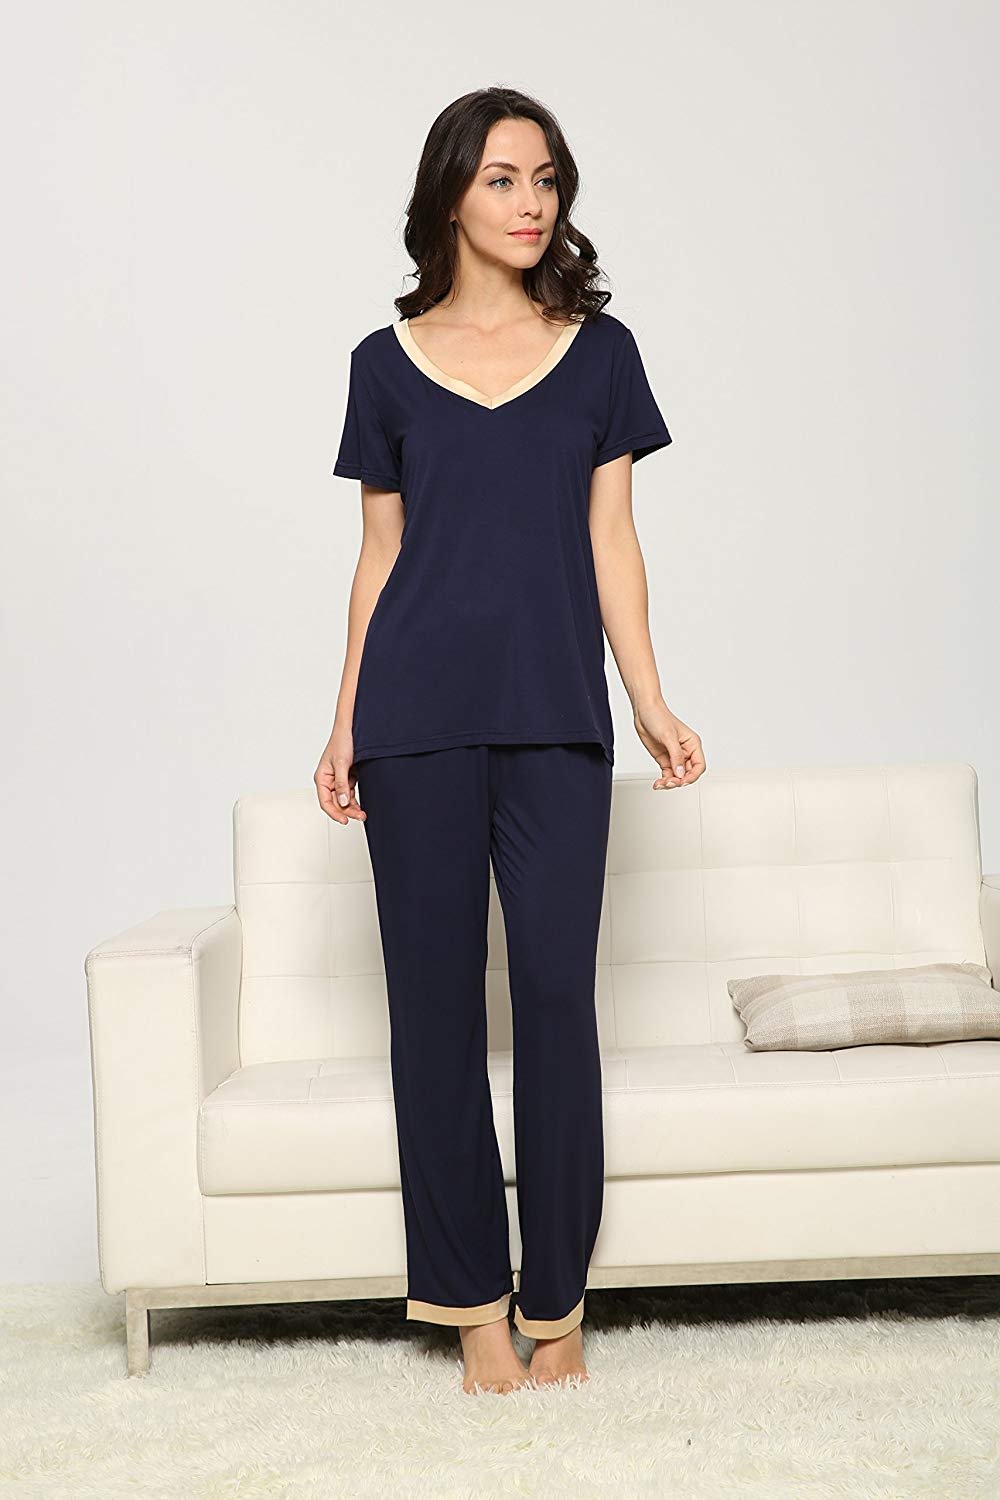 Women's V-Neck Sleepwear Short Sleeves Top with Pants Pajama Set